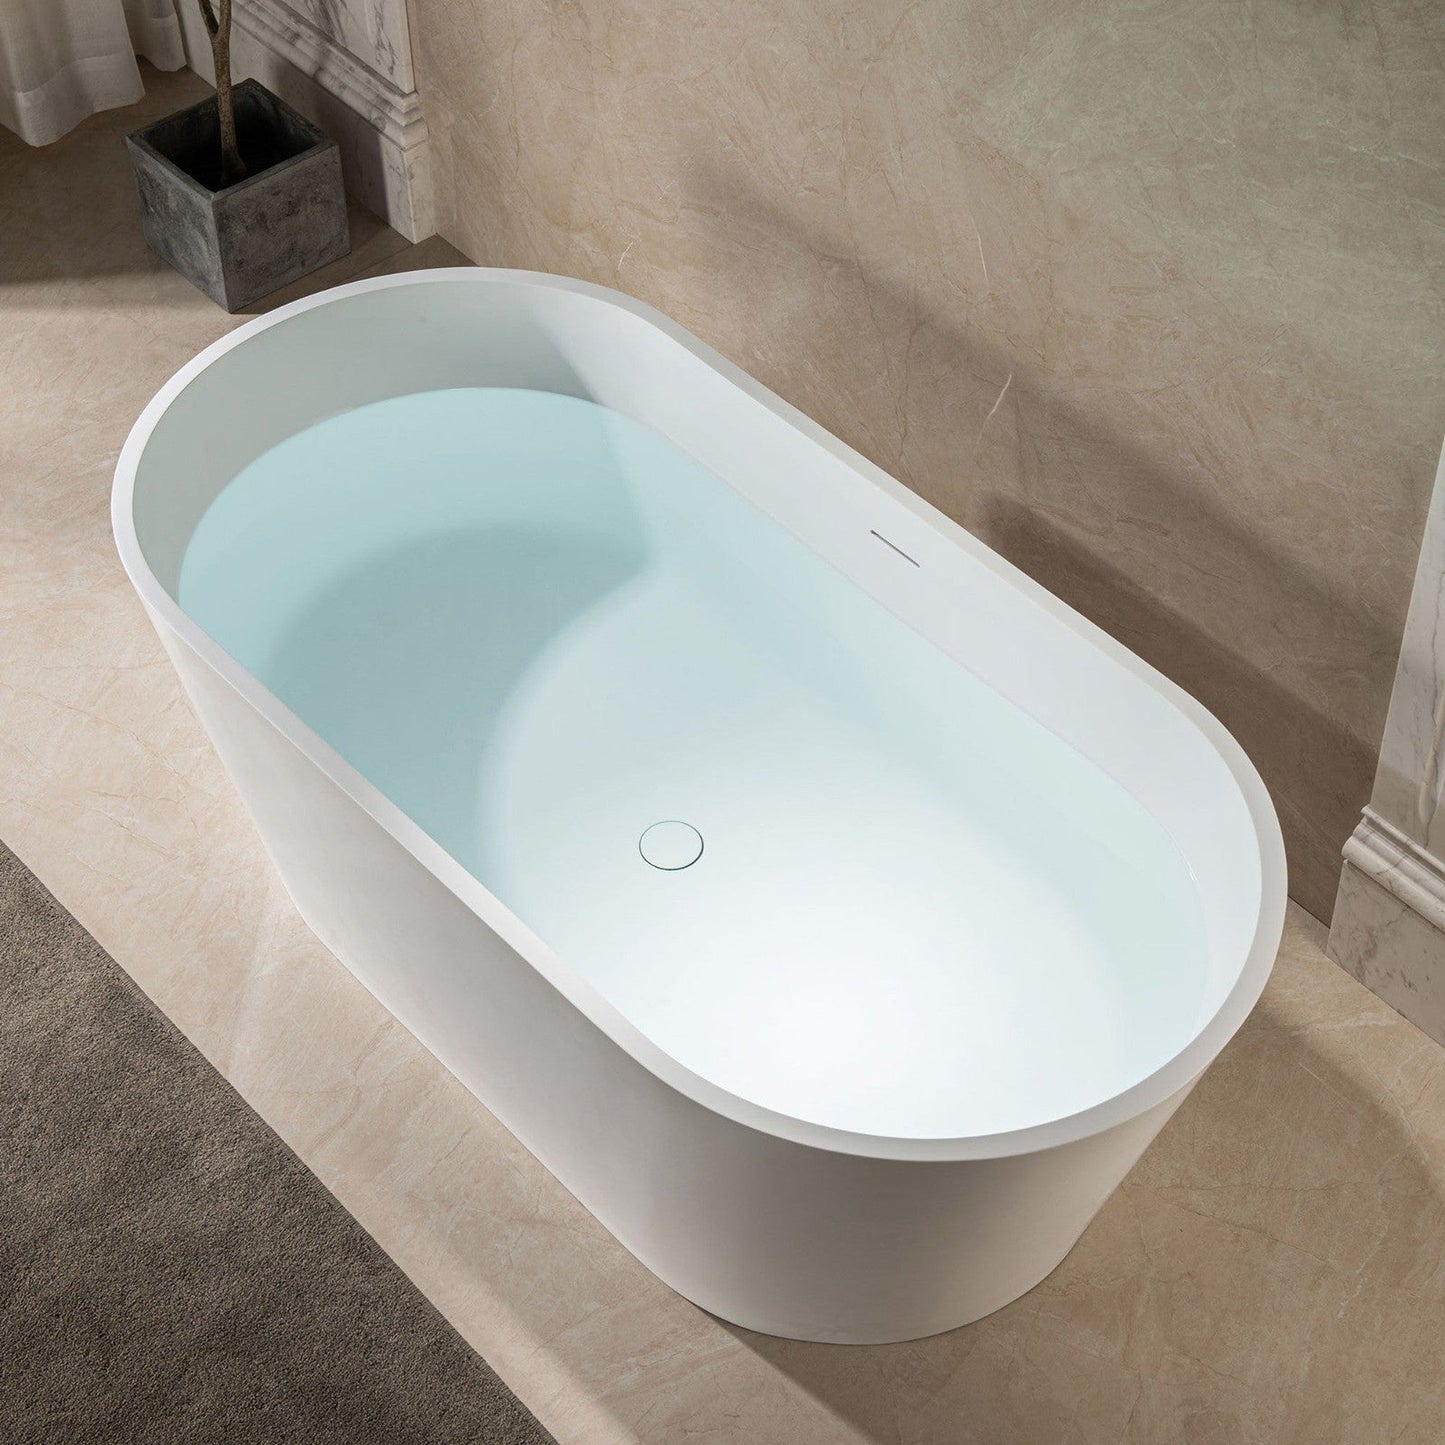 WoodBridge B0041 59" Matte White Luxury Contemporary Solid Surface Freestanding Bathtub